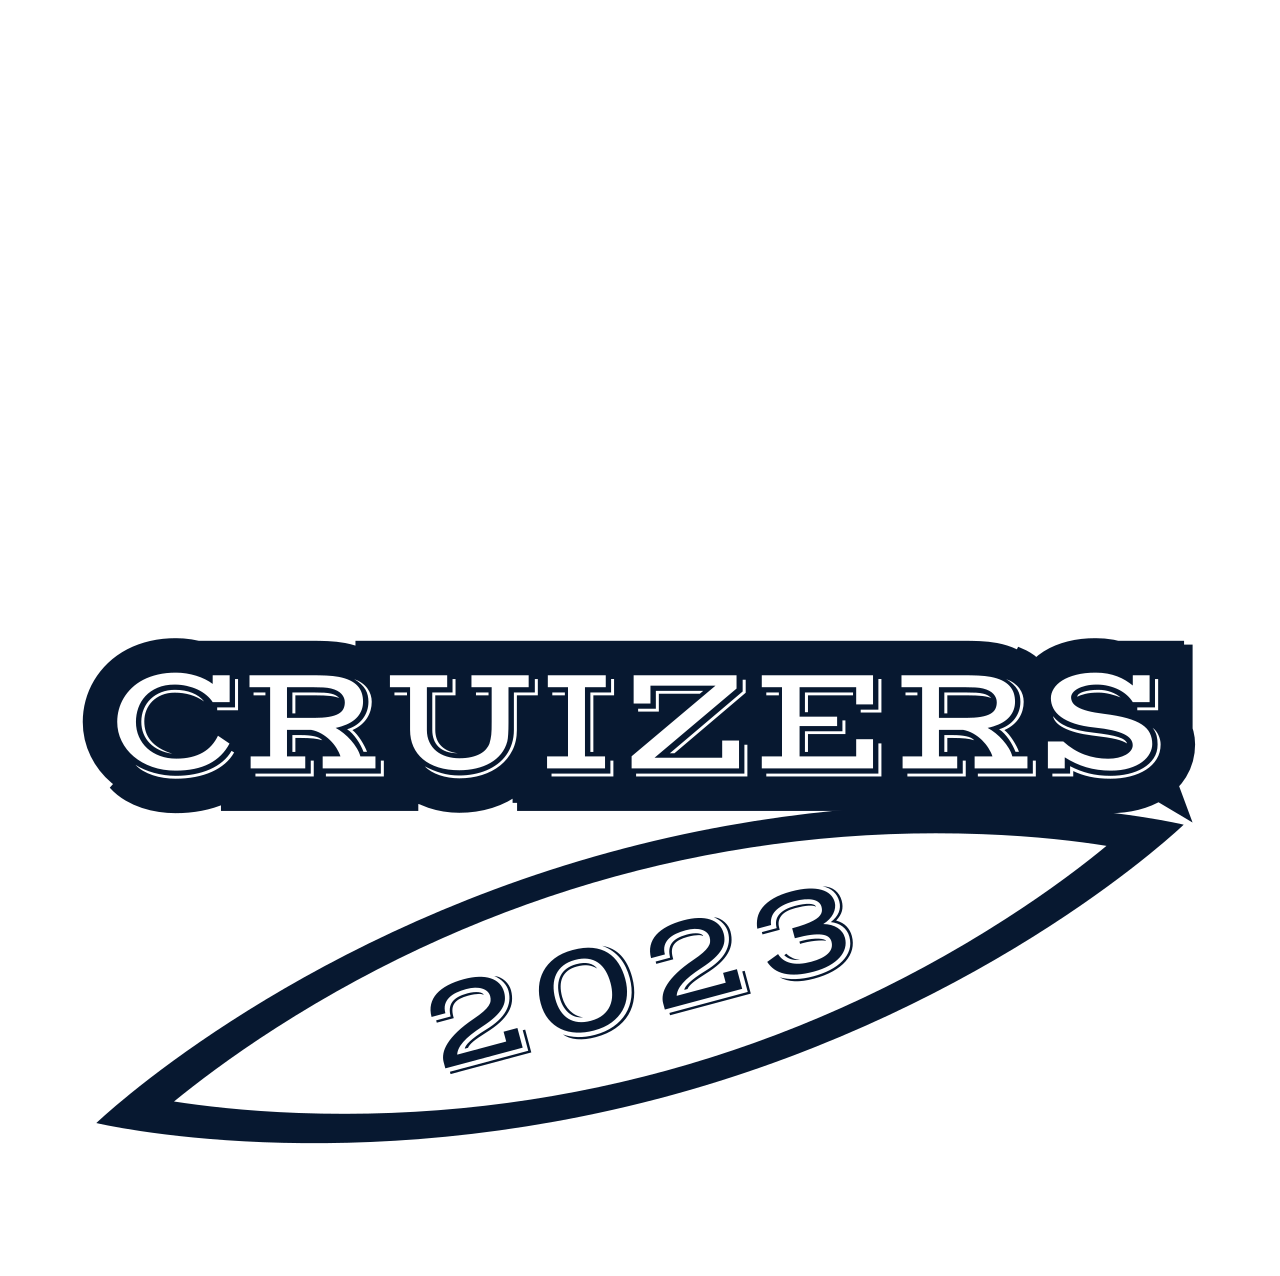 Cruizers's web page